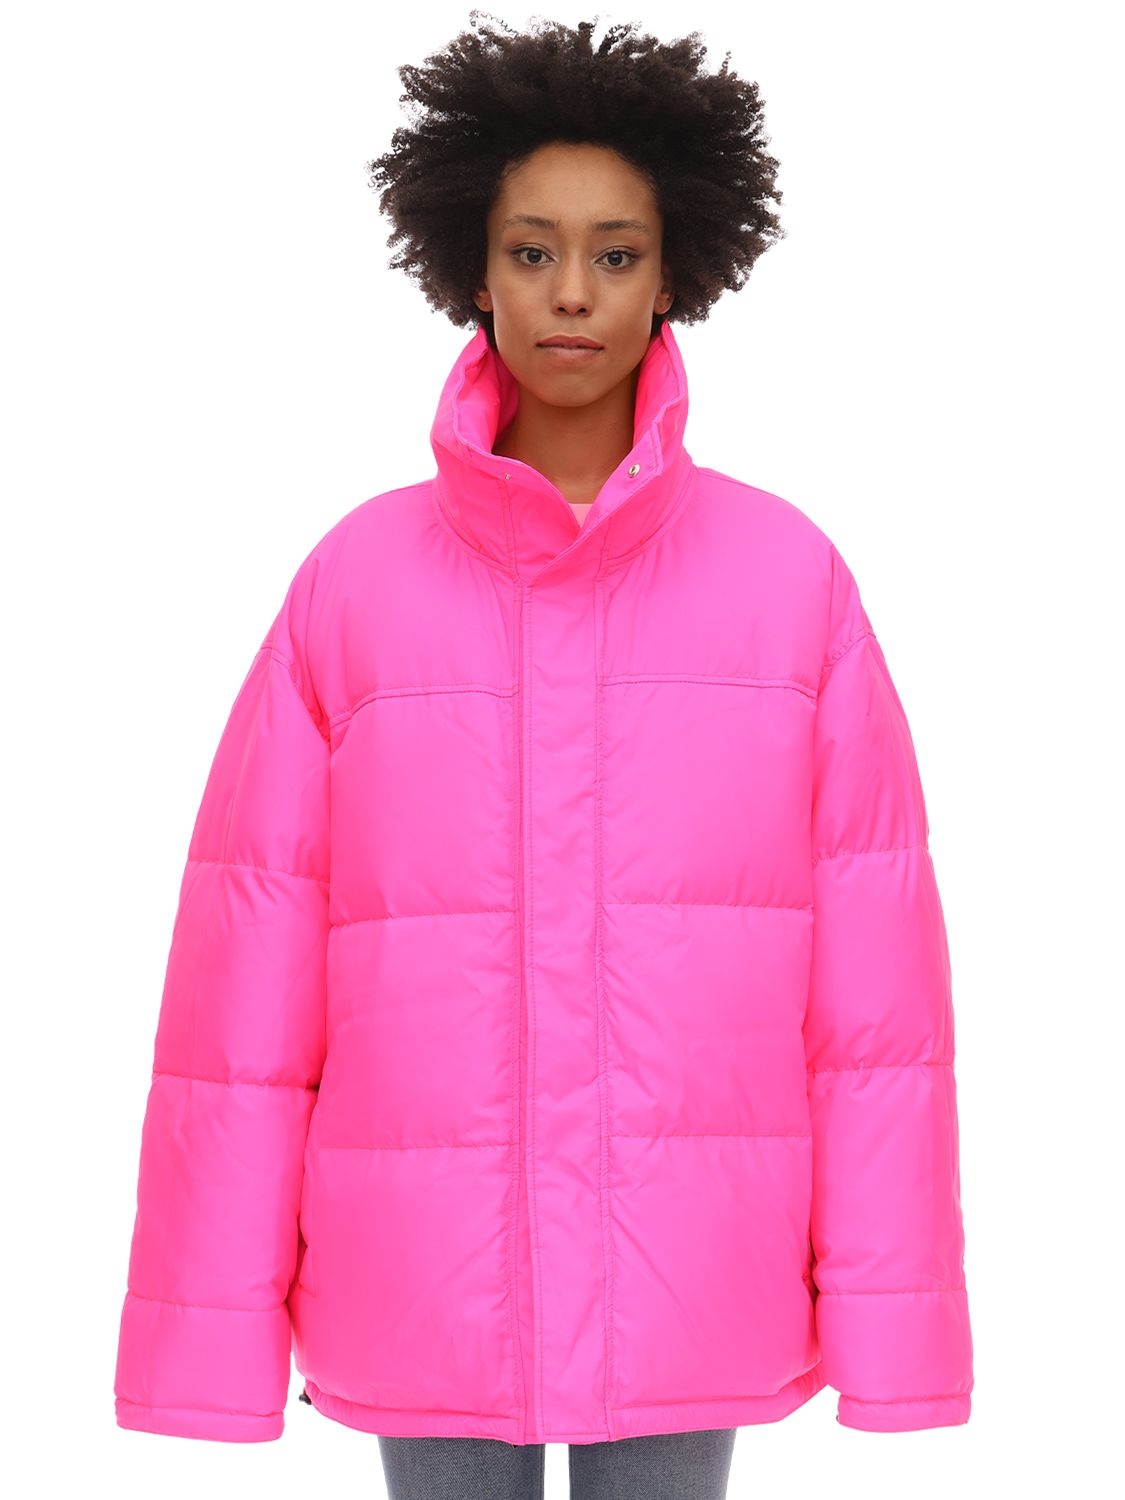 pink down coat